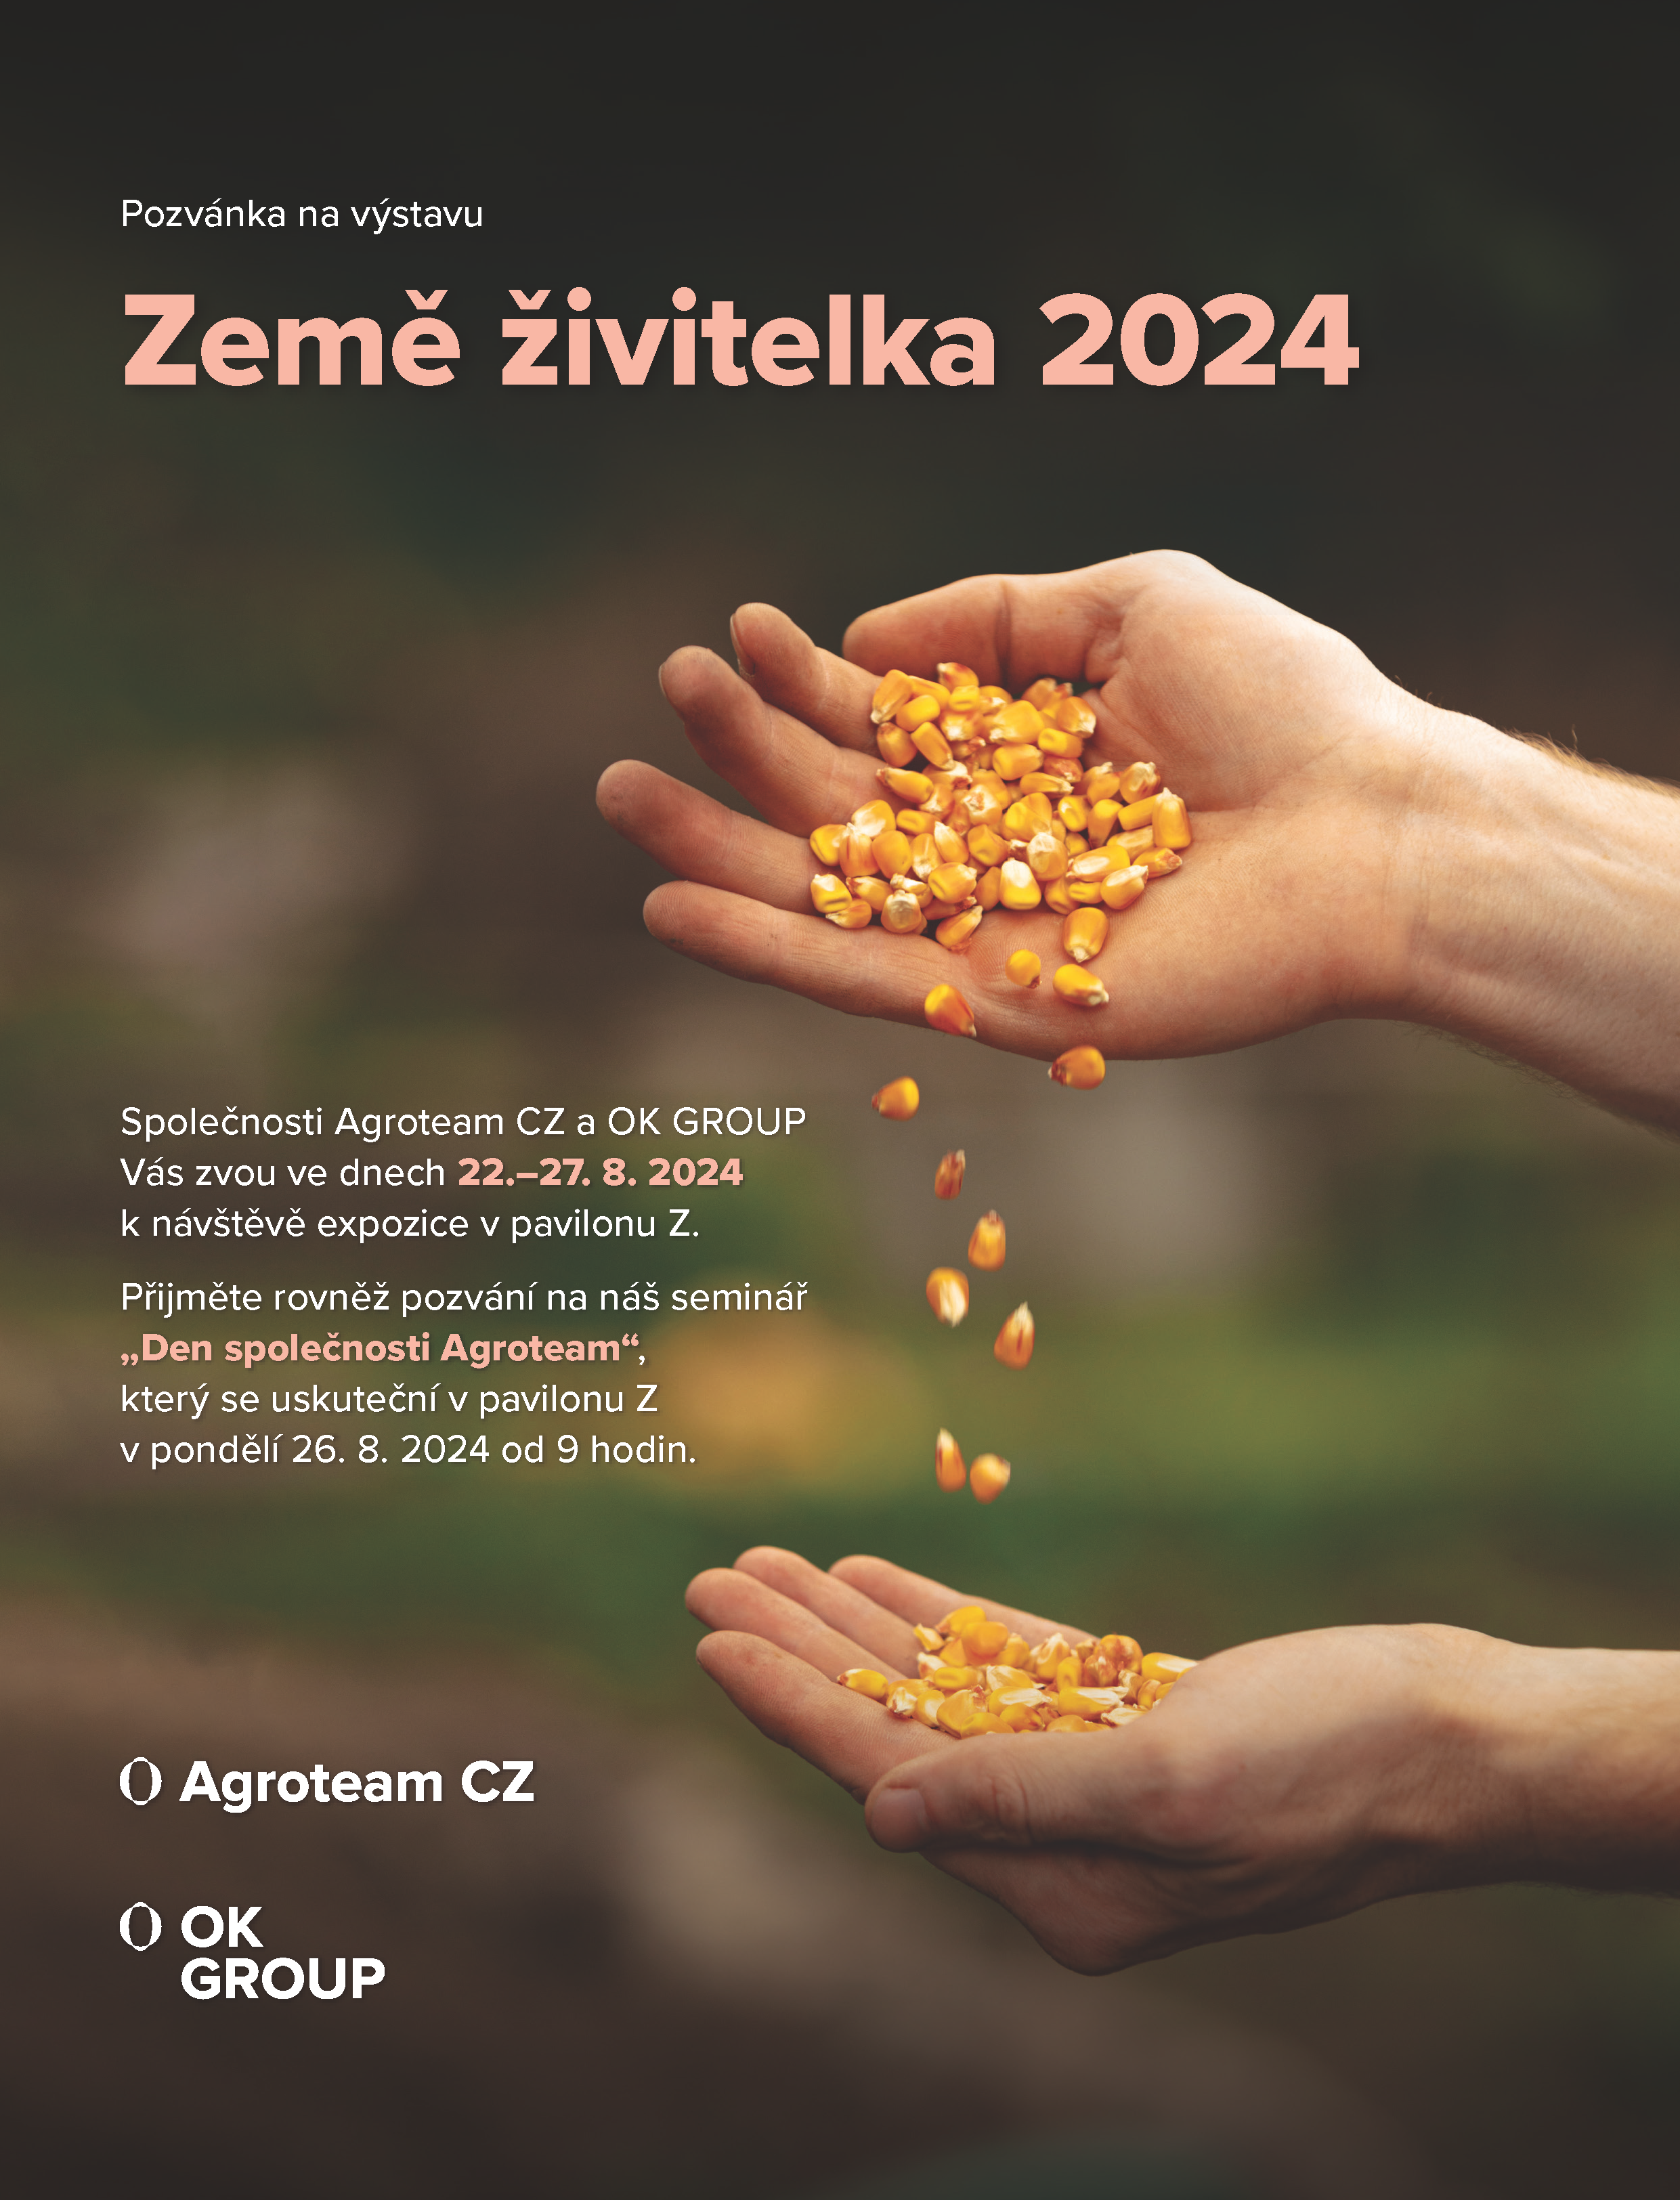 https://www.okgroup.cz/media/aktuality/zeme-zivitelka-bulletin-210x275mm-1.png